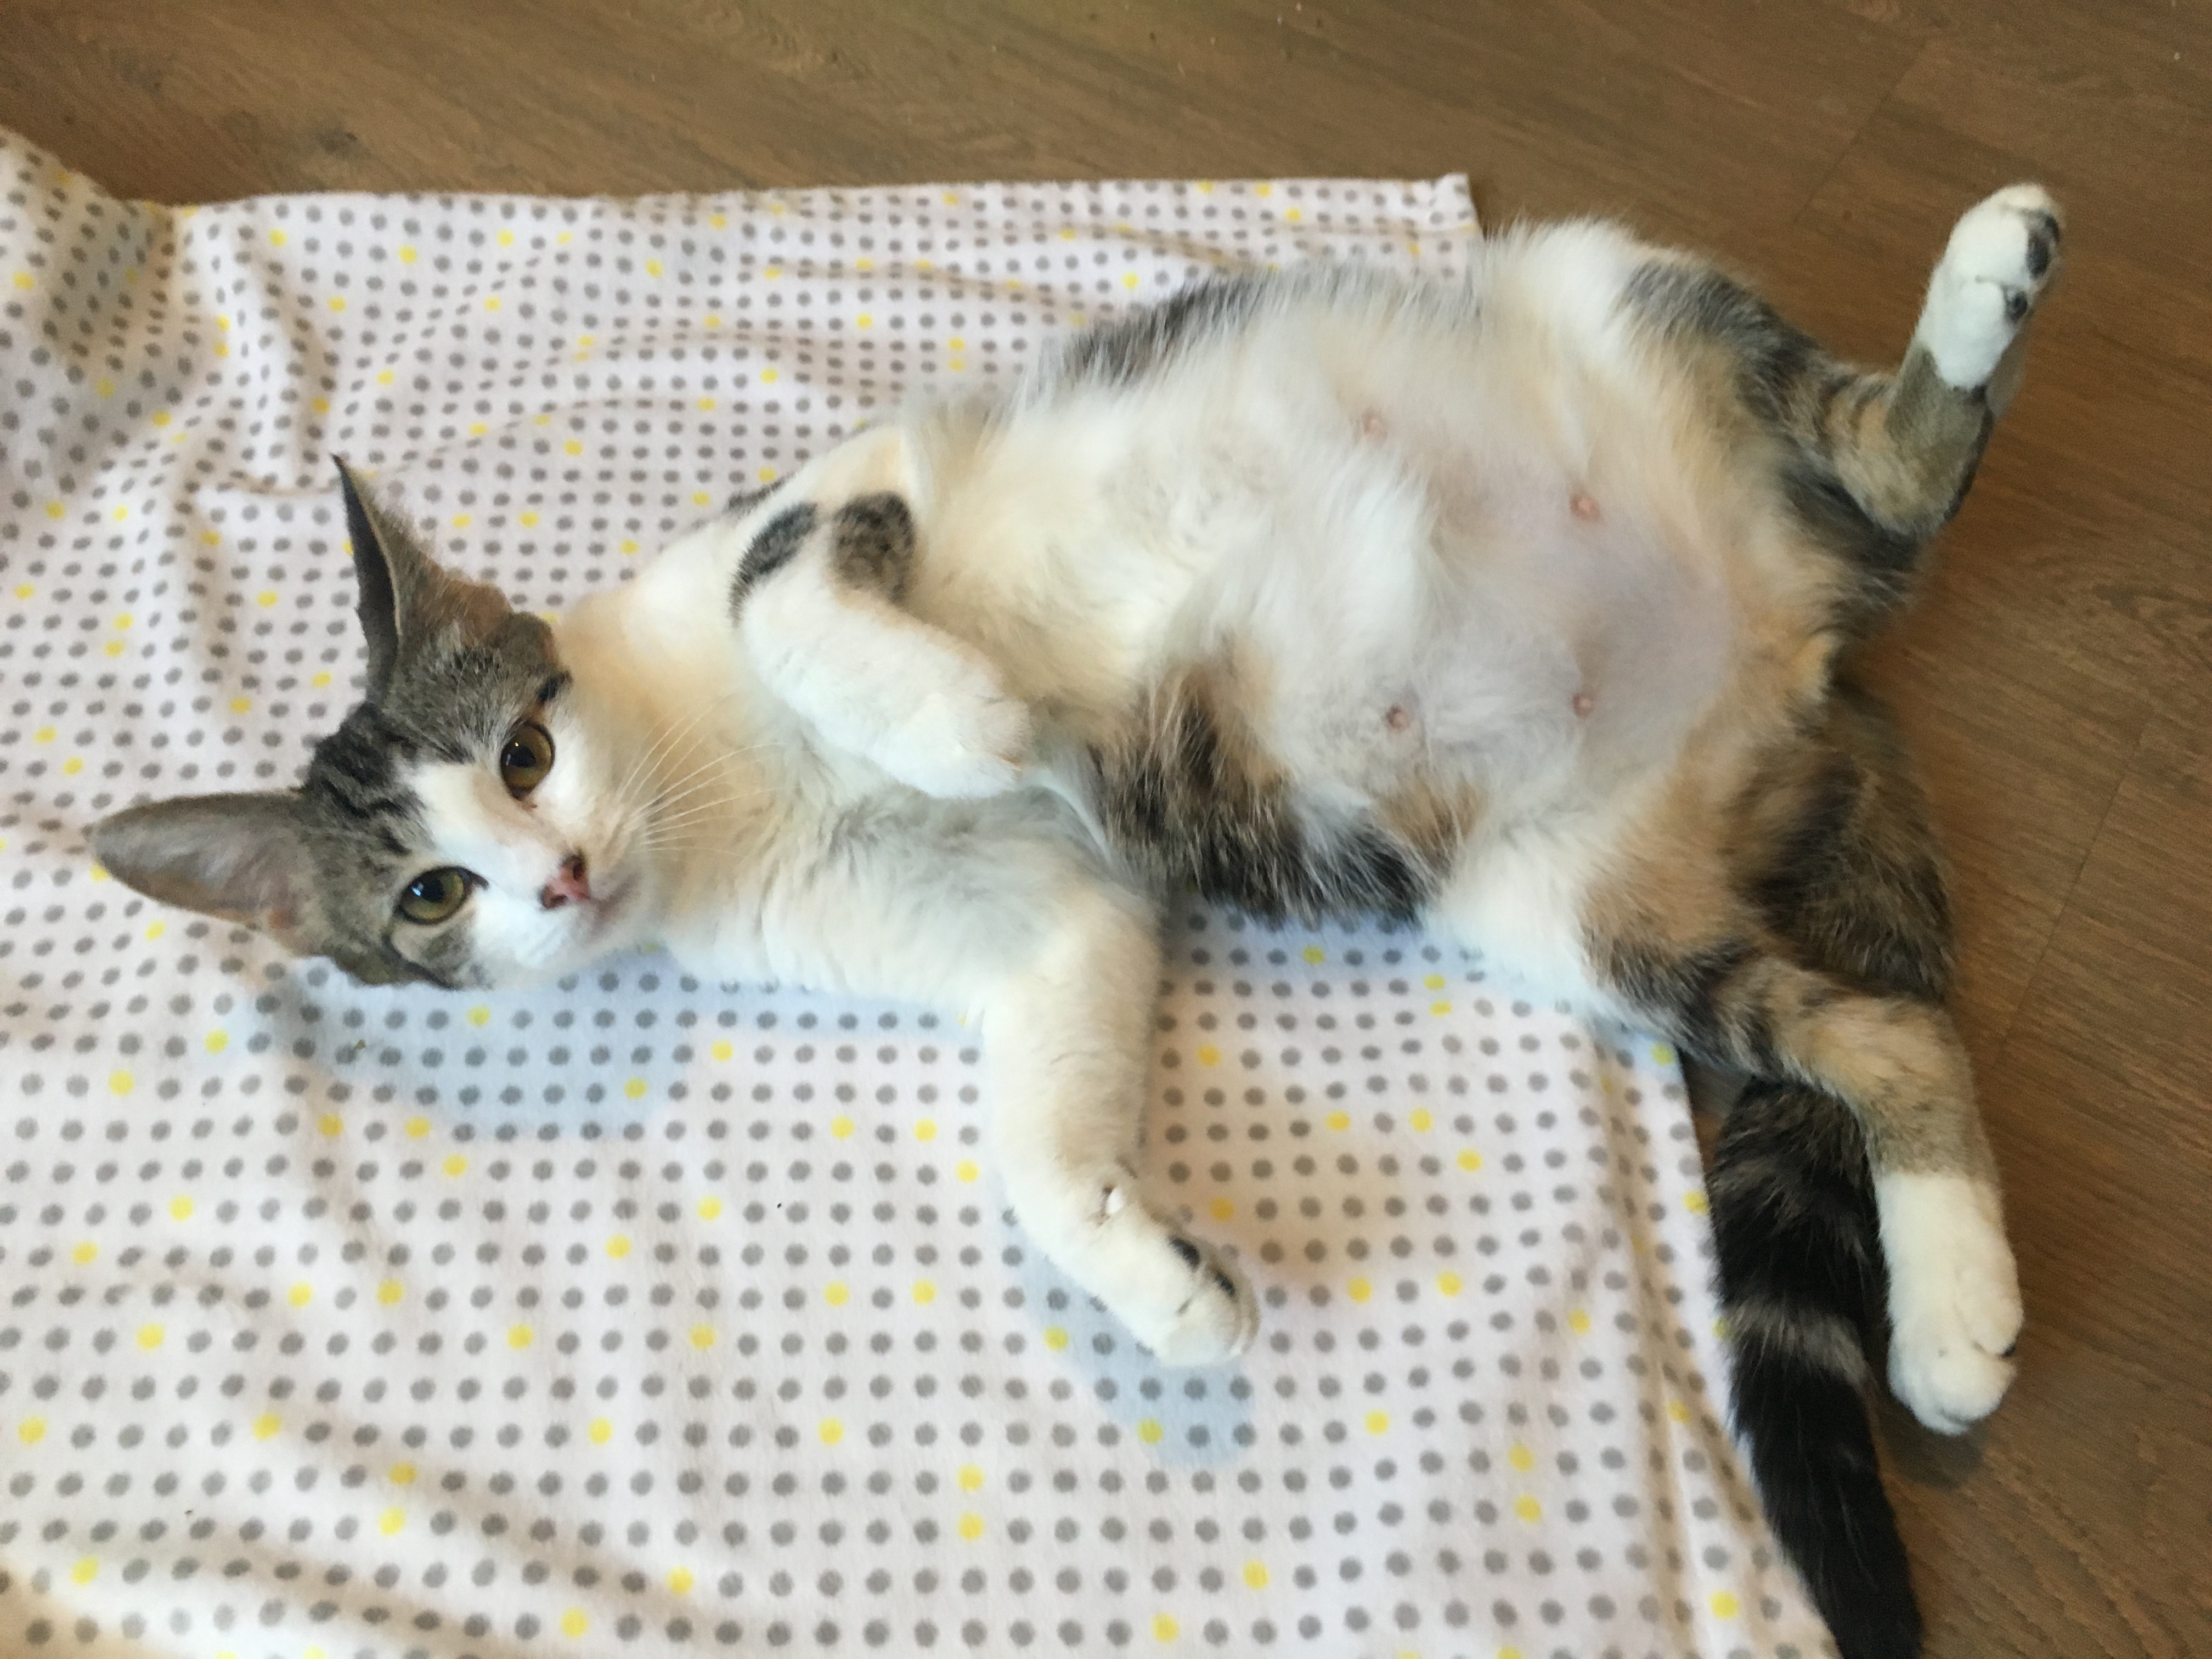 7 Weeks Pregnant Cat Vomiting Undigested Food TheCatSite